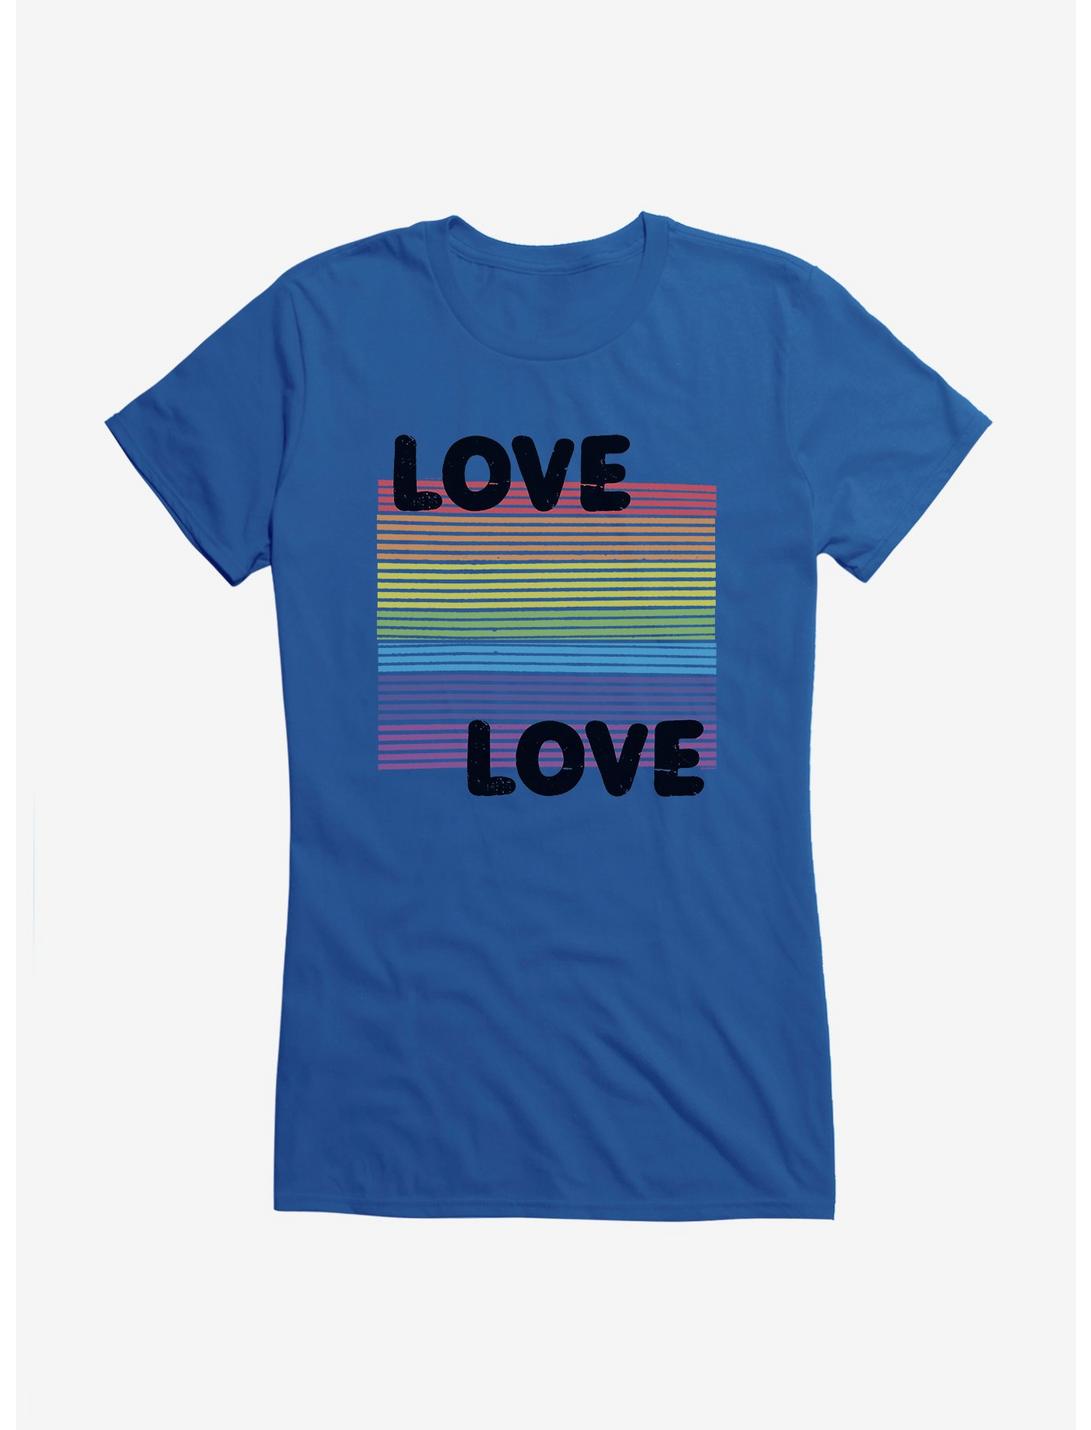 iCreate Pride Rainbow Love Stripes T-Shirt, , hi-res